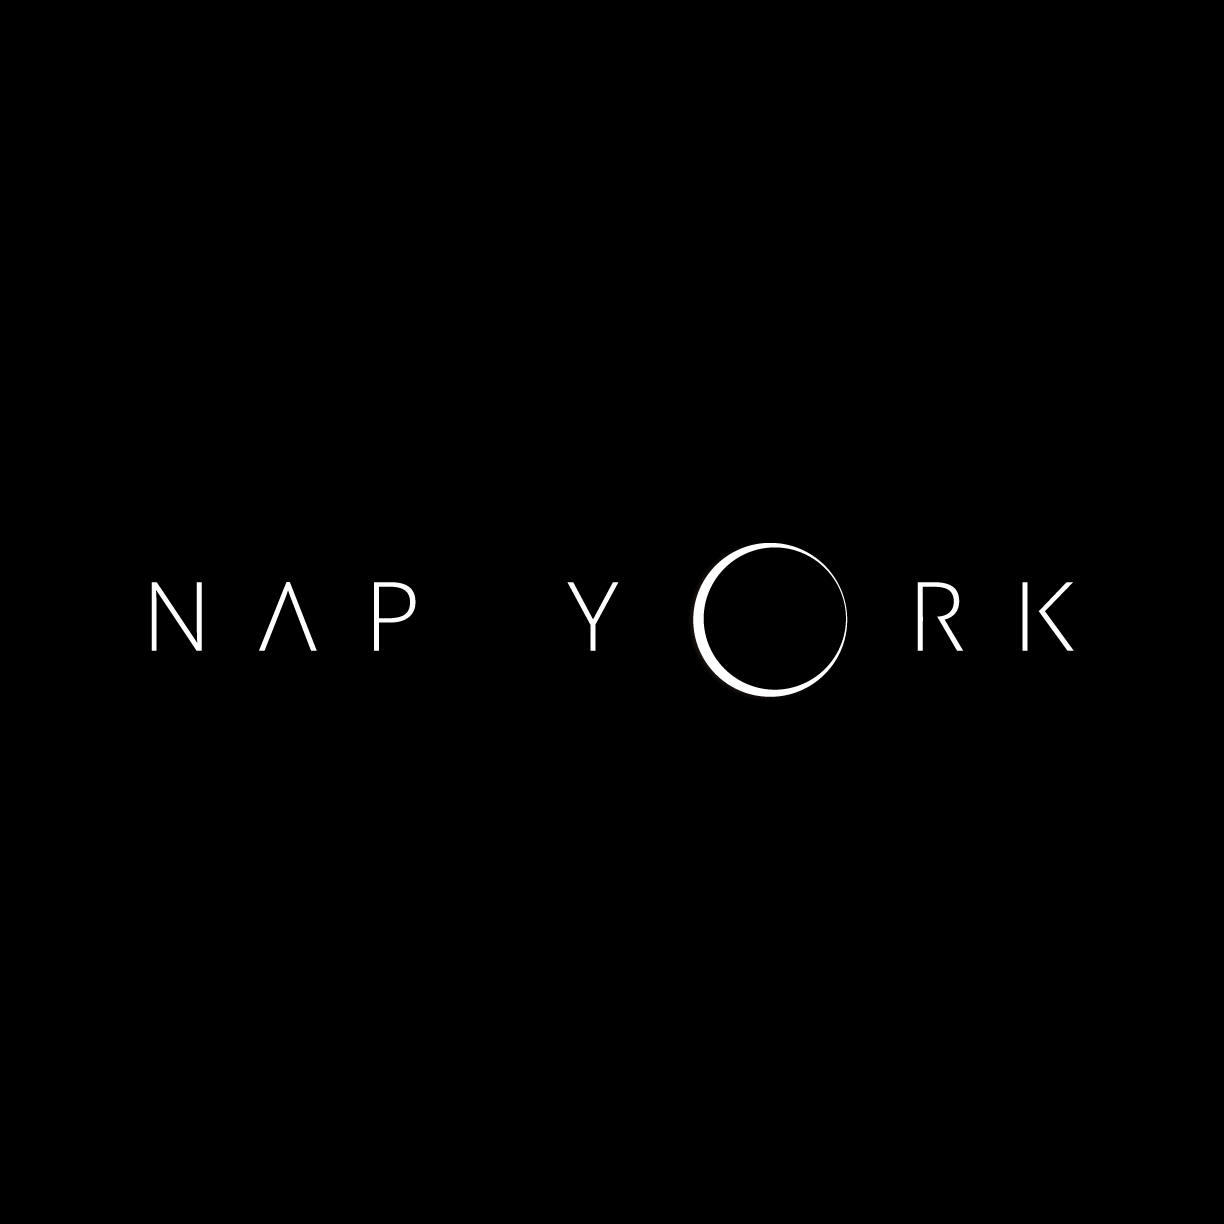 Nap York